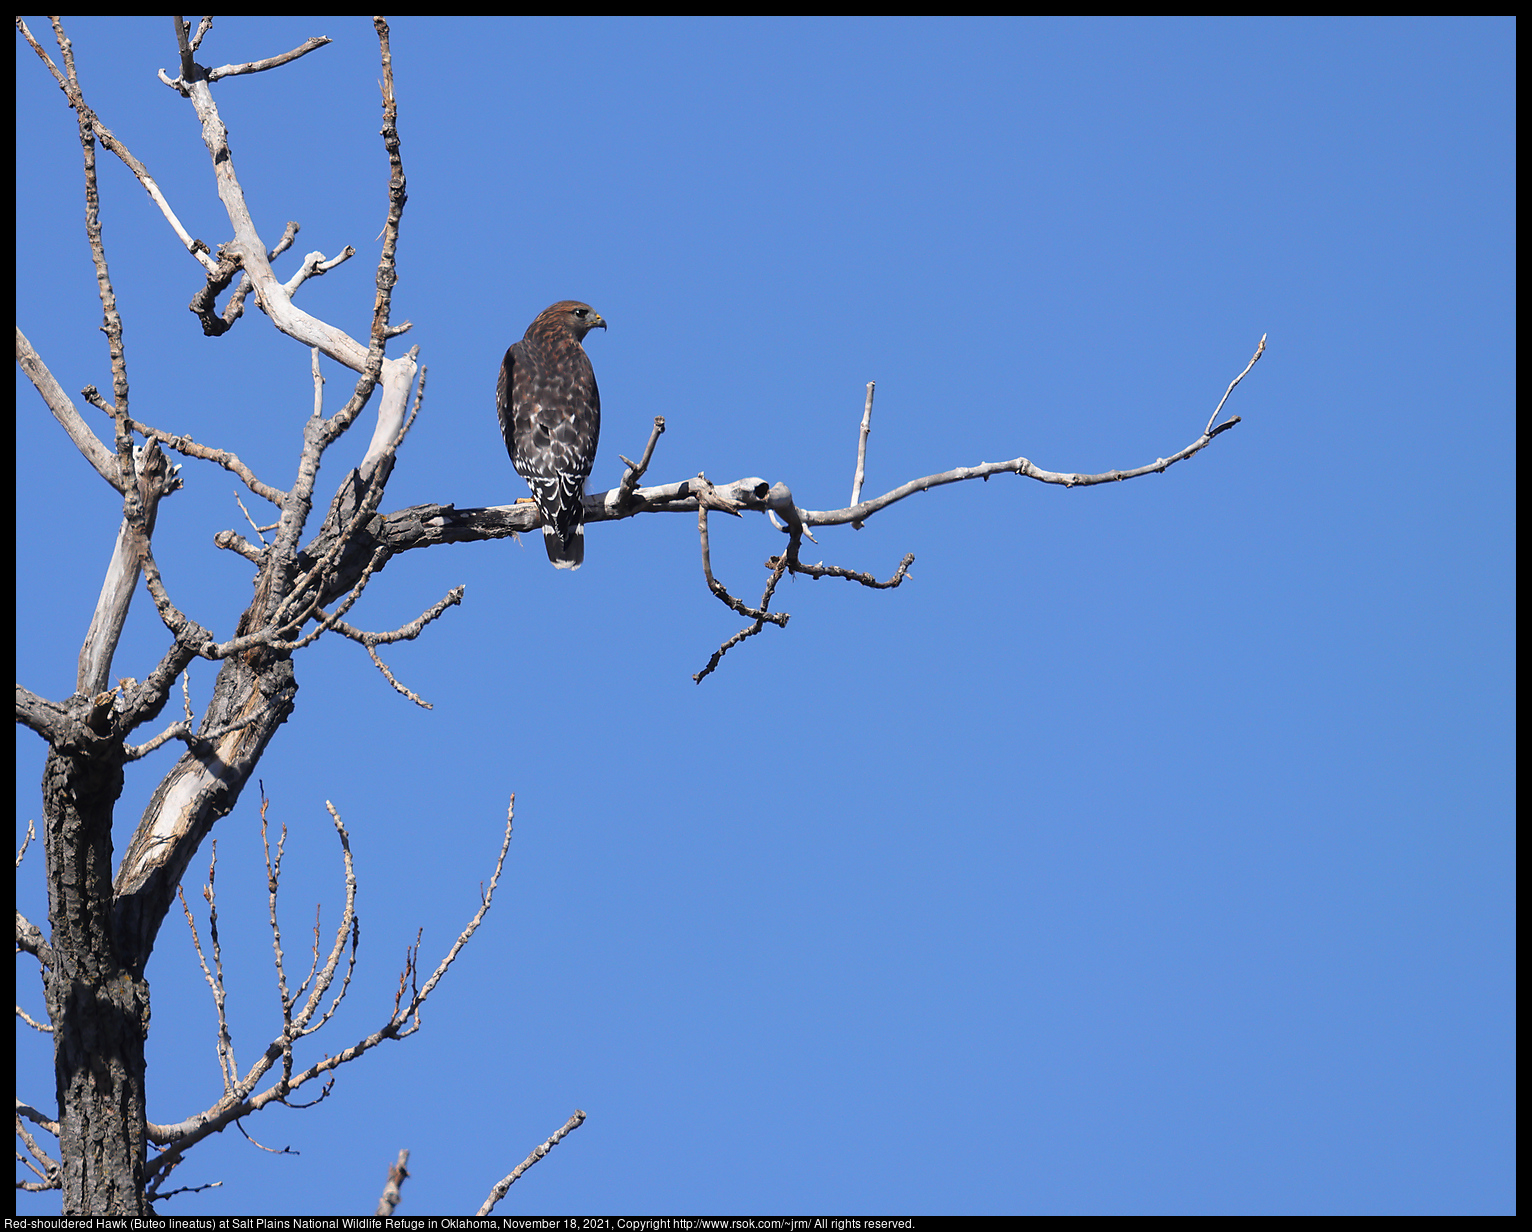 Red-shouldered Hawk (Buteo lineatus) at Salt Plains National Wildlife Refuge in Oklahoma, November 18, 2021